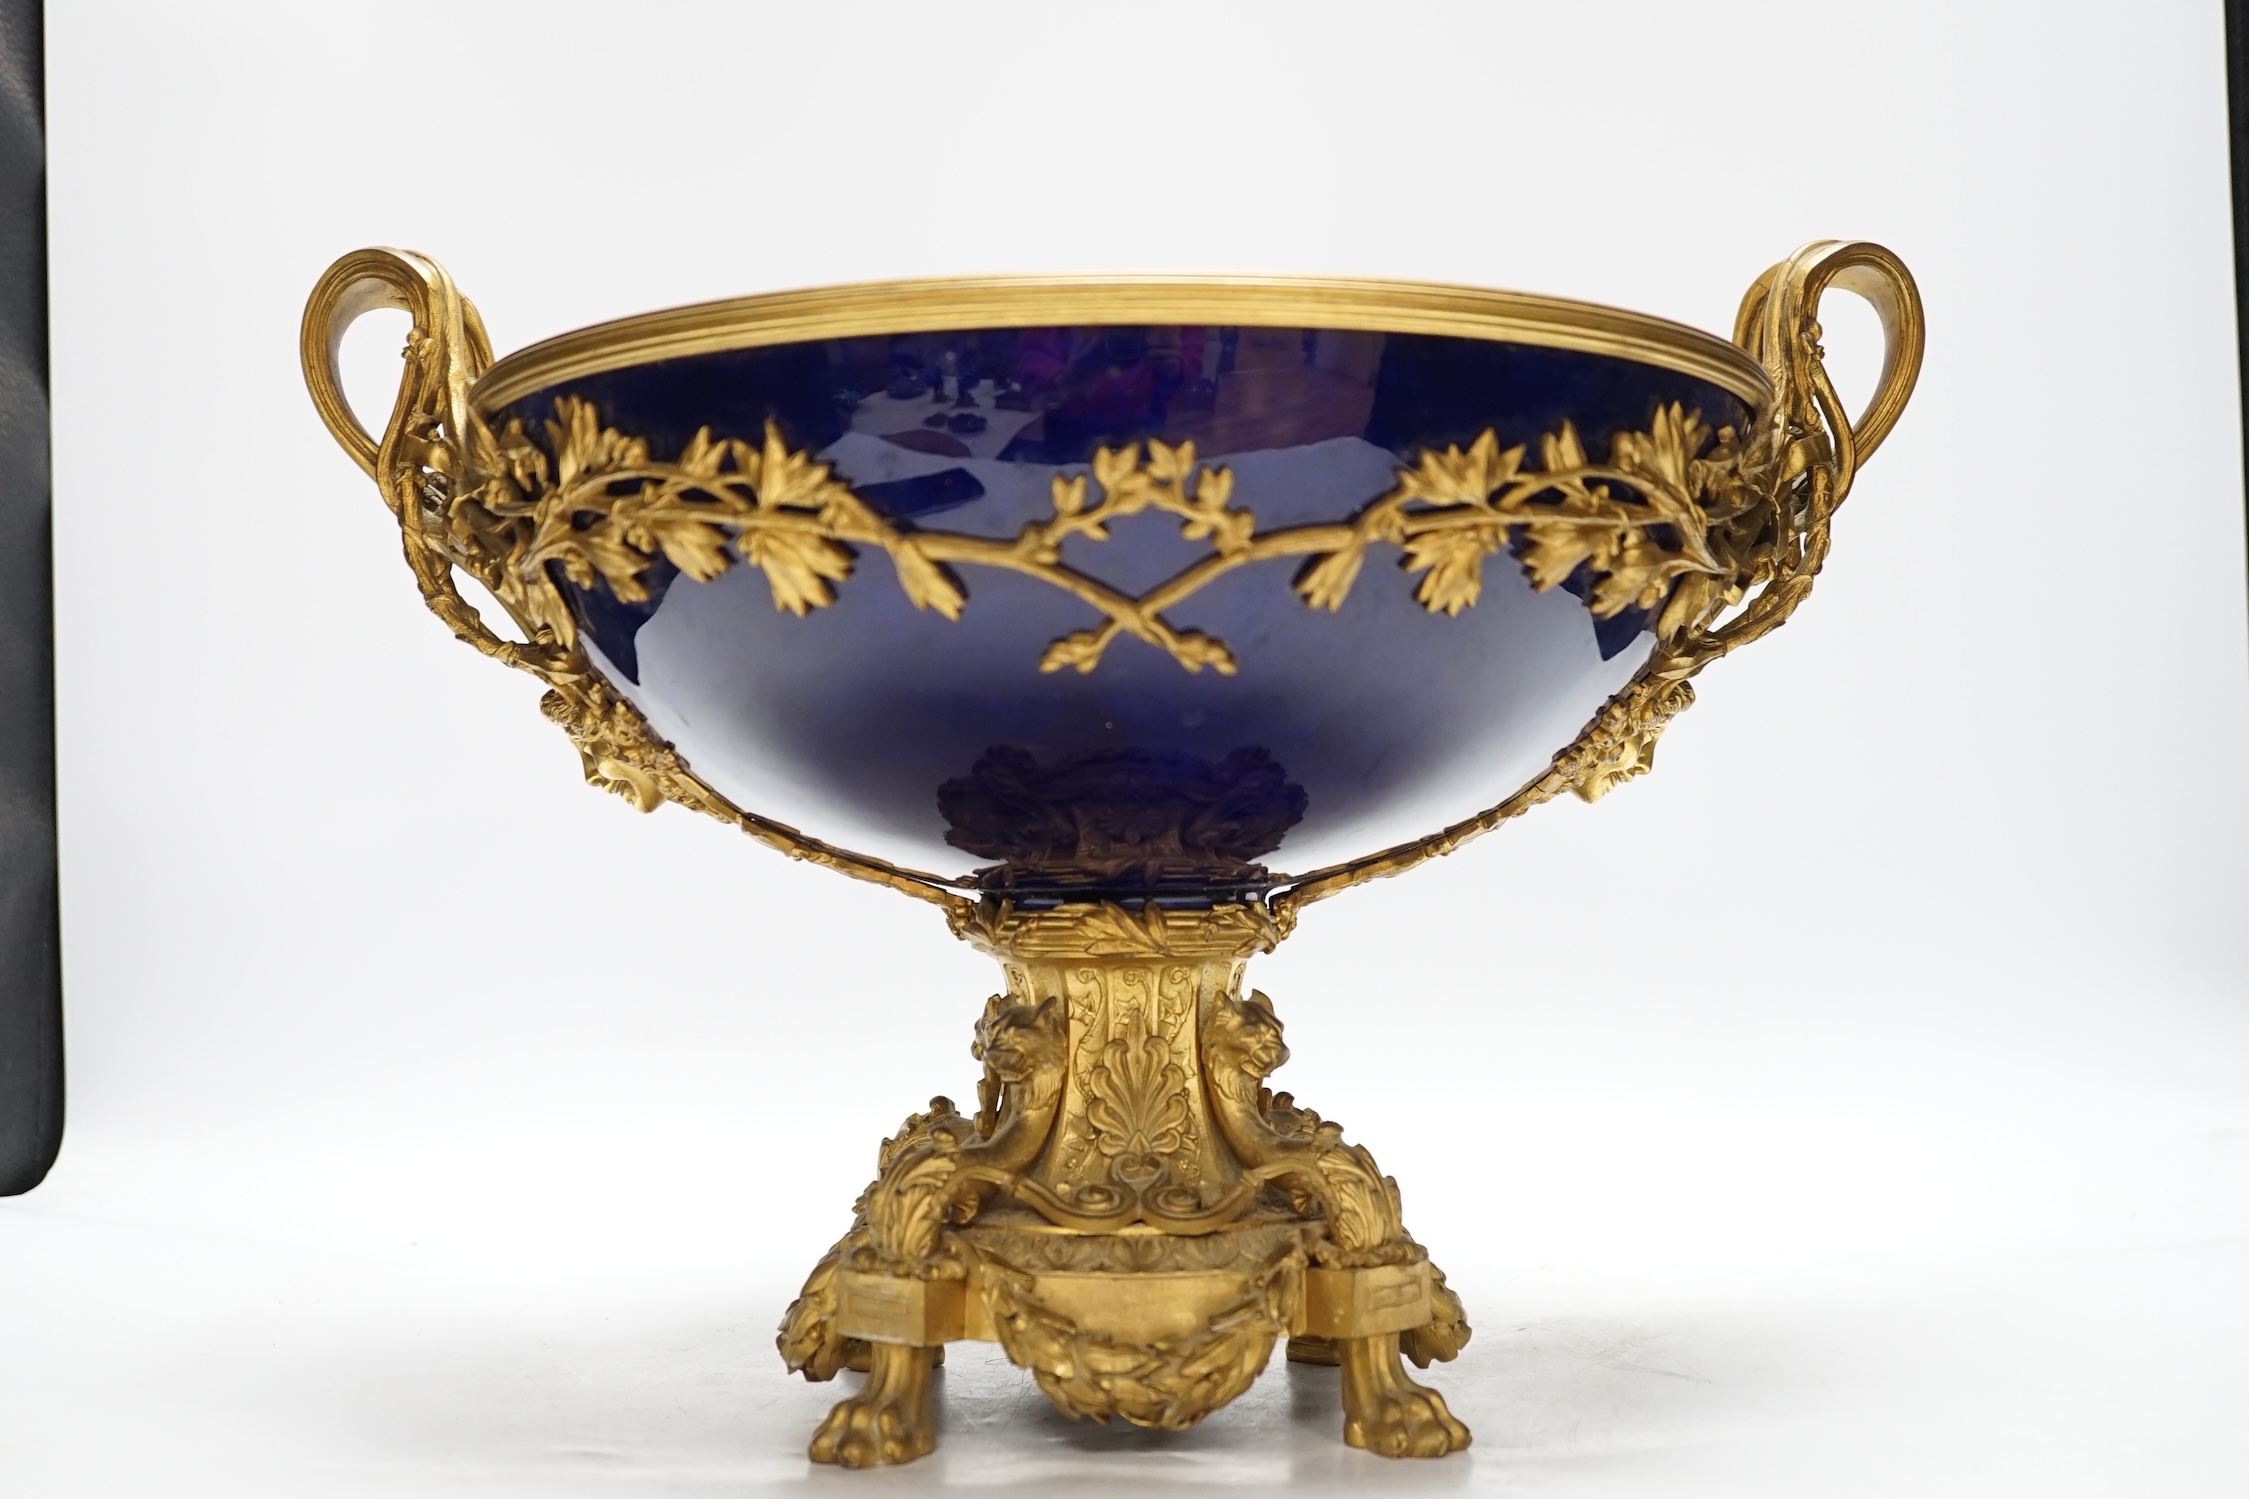 A large Louis XVI style ormolu and porcelain double handled centre dish, 27.5cm high, 31cm diameter